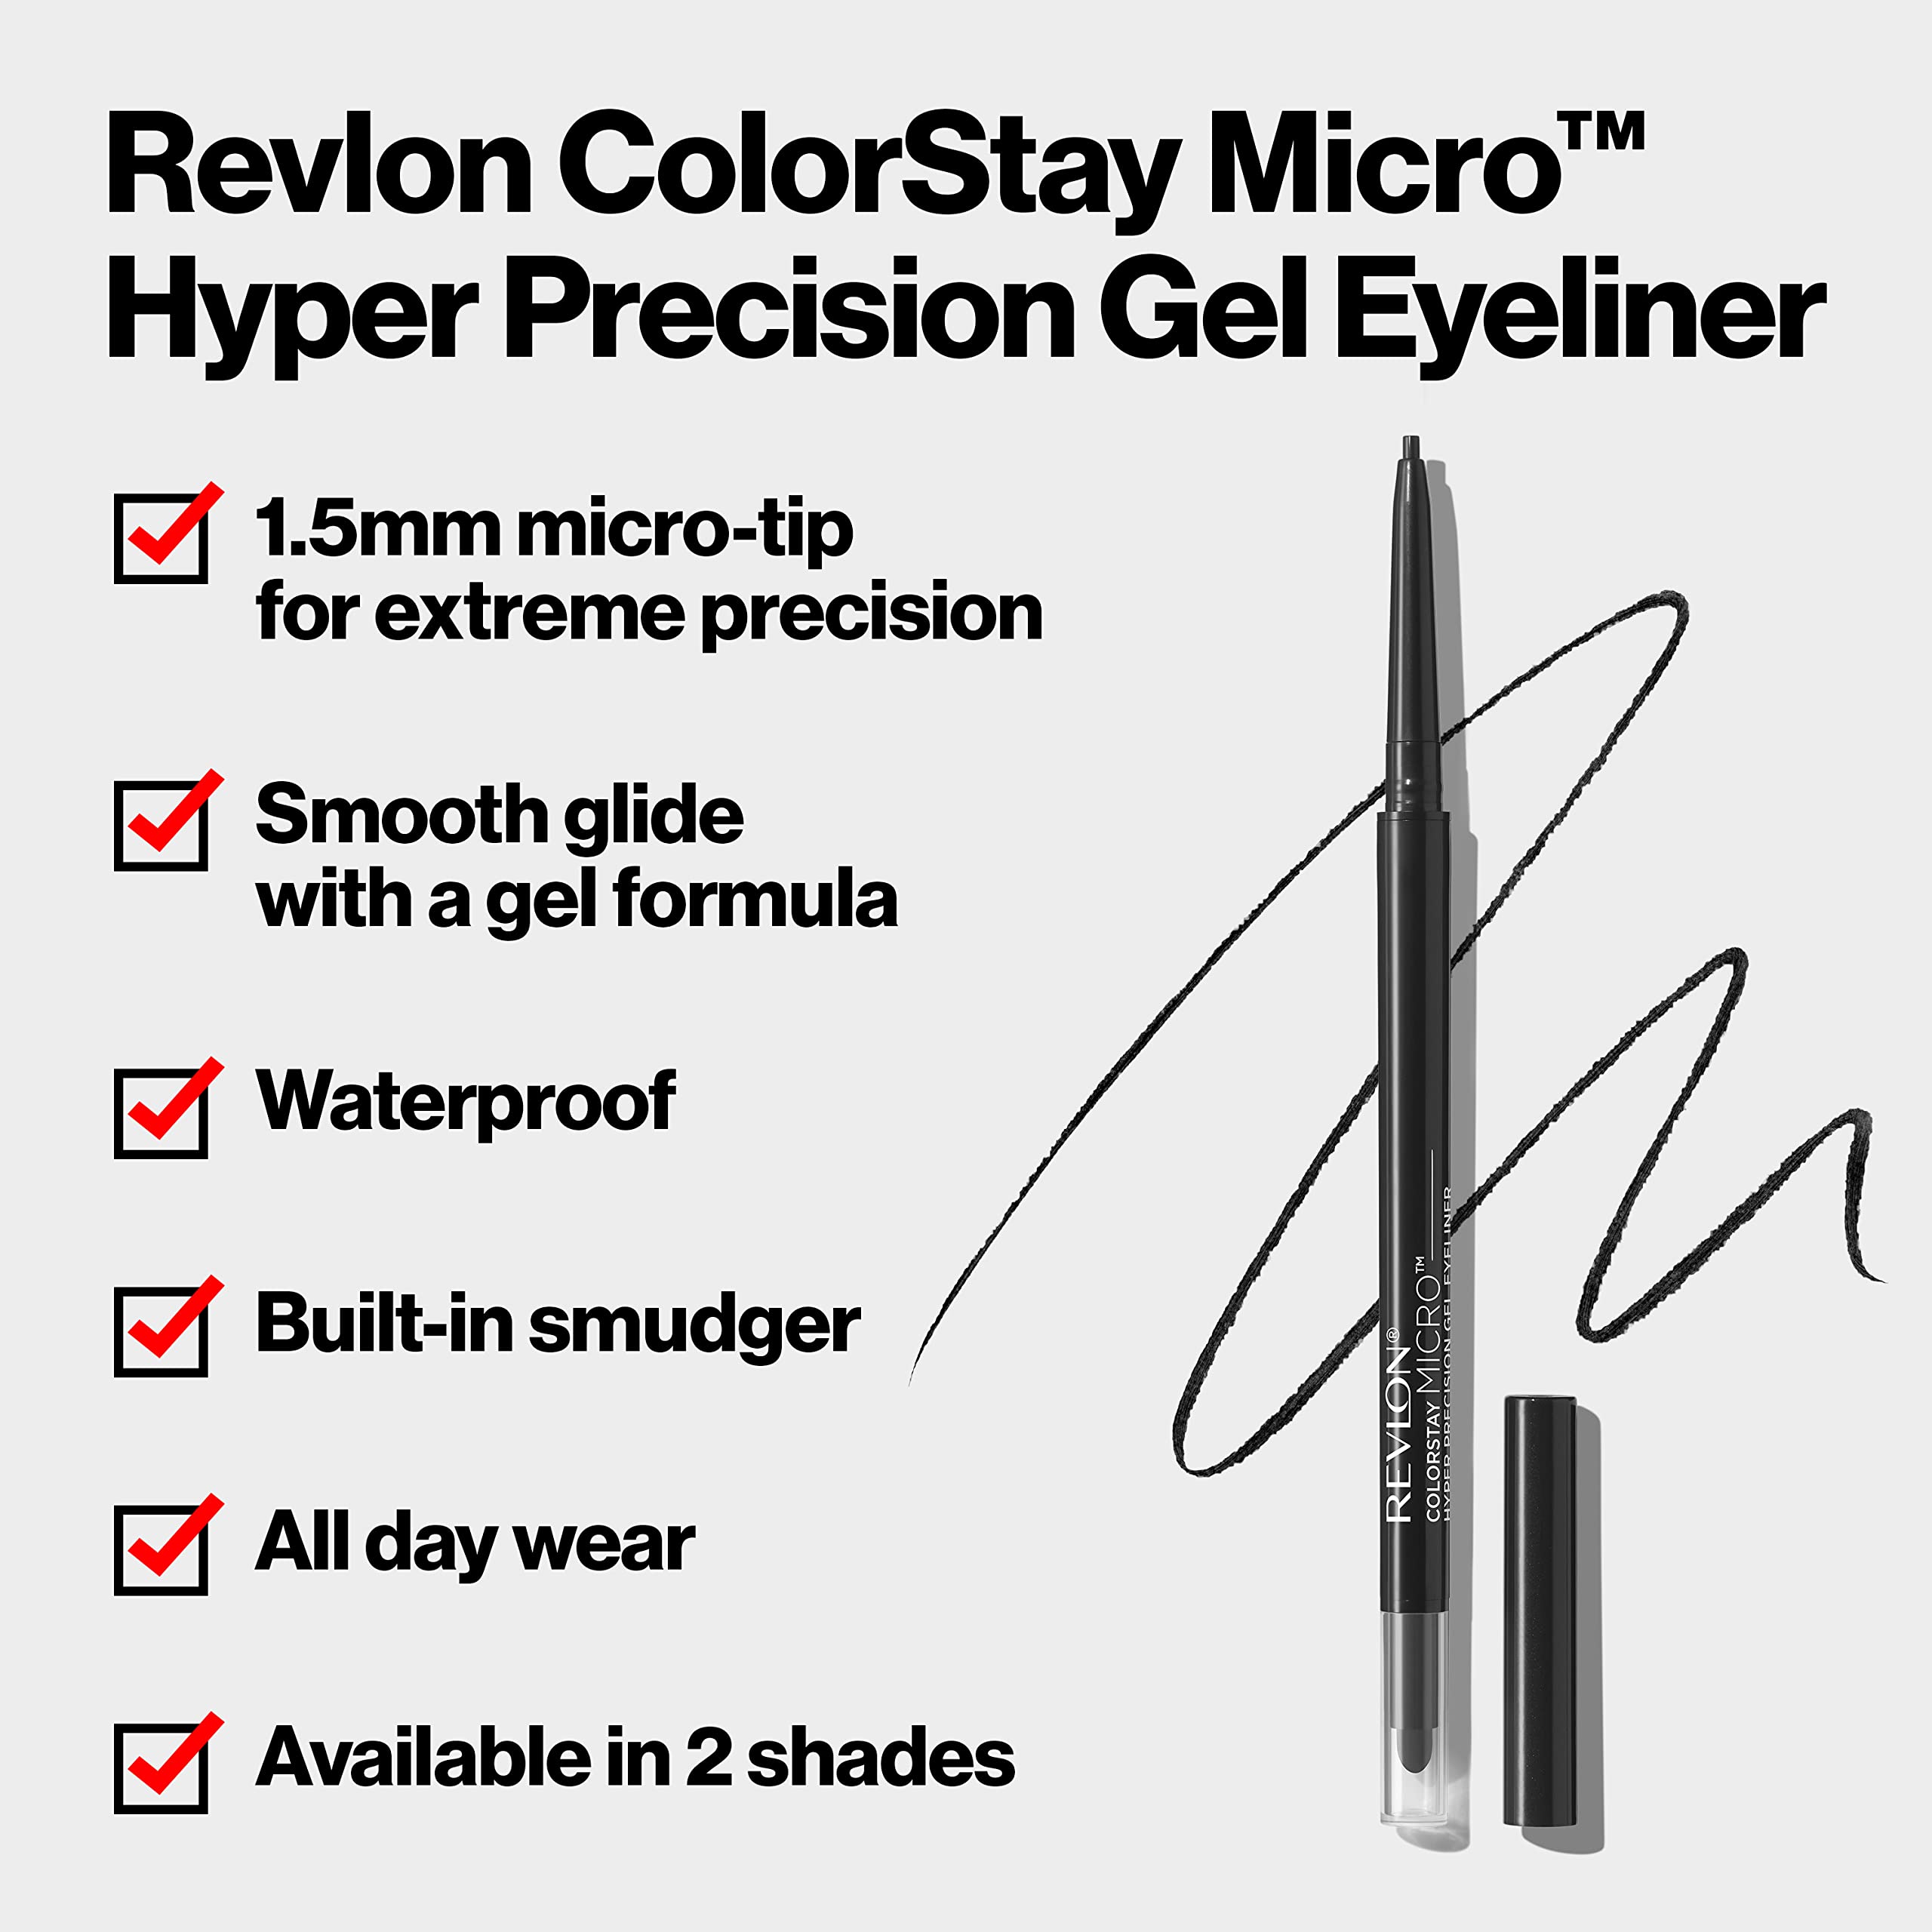 REVLON ColorStay Micro Hyper Precision Gel Eyeliner